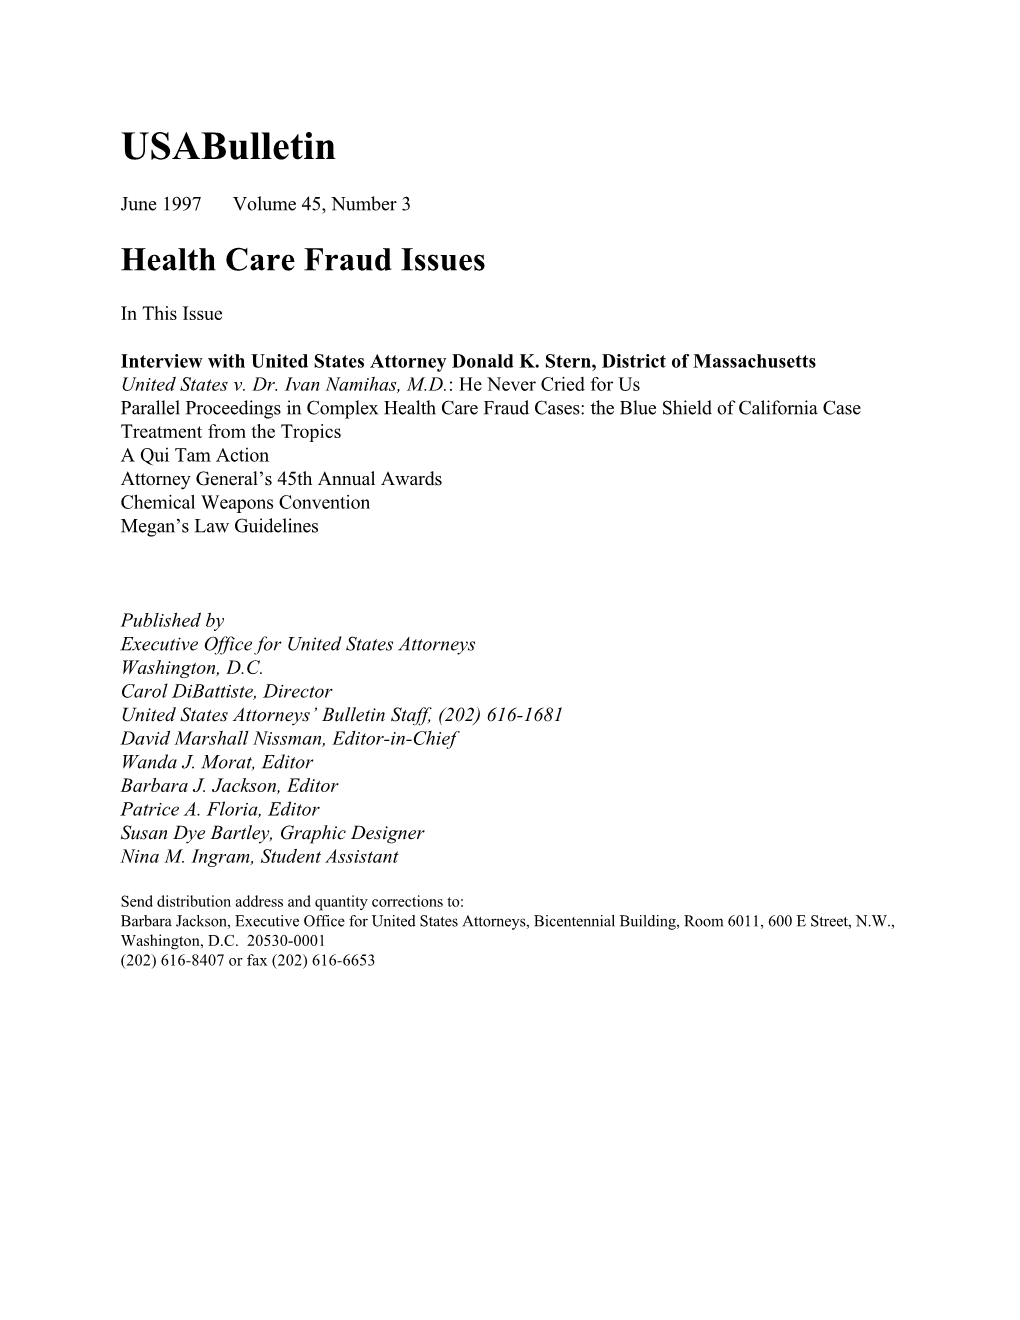 U.S. Attorneys' Bulletin Vol 45 No 03, Health Care Fraud II